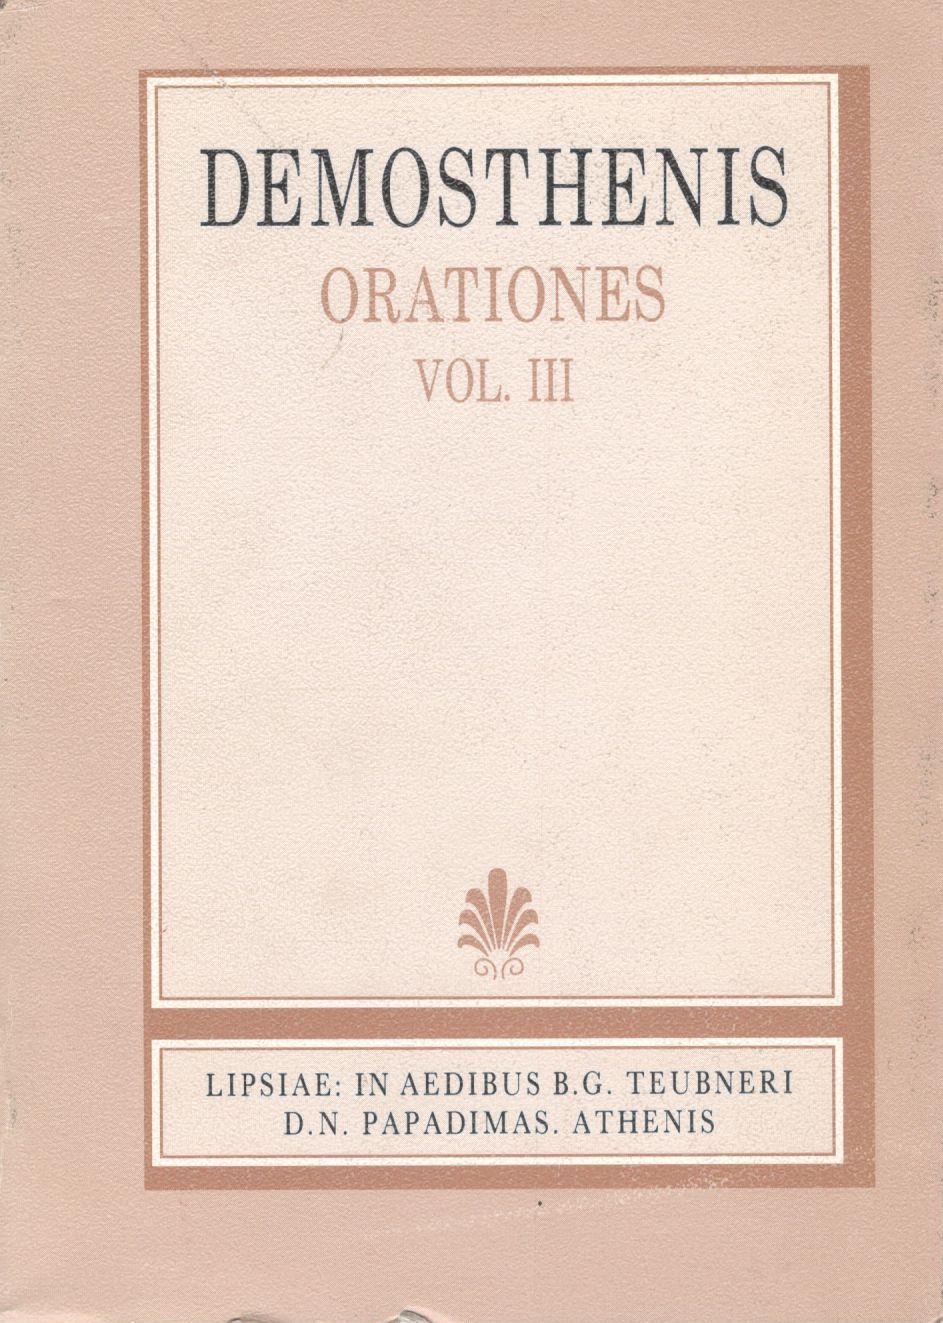 Demosthenis Orationes XLI-LXI, Vol. III [Δημοσθένους Λόγοι, τ. Γ